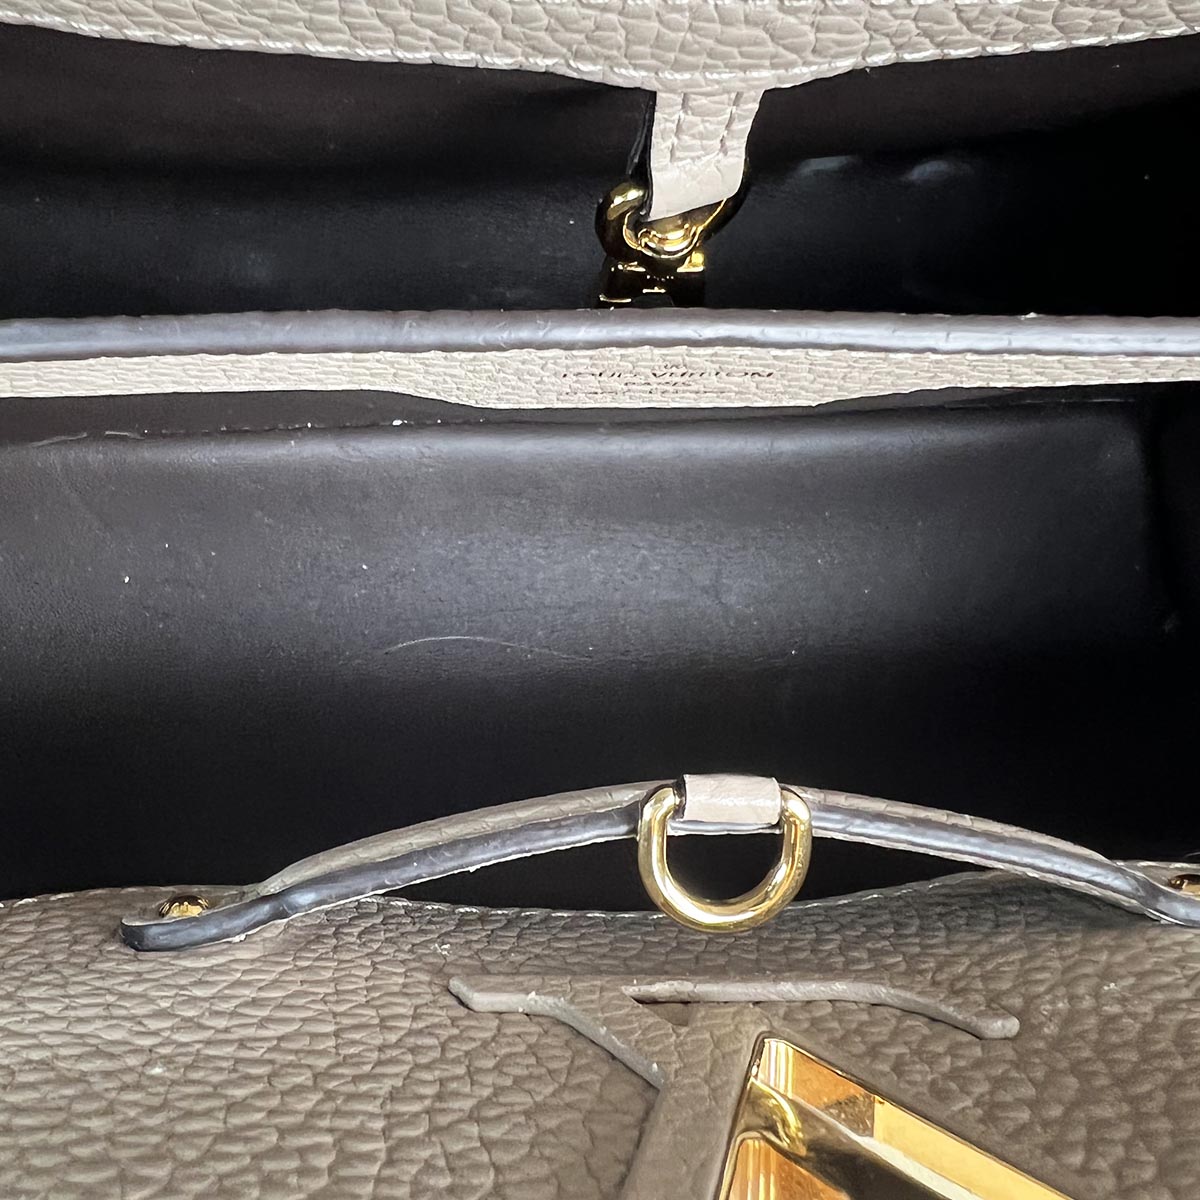 Louis Vuitton Capucine PM Teddy Fleece Top Handle Shoulder Bag